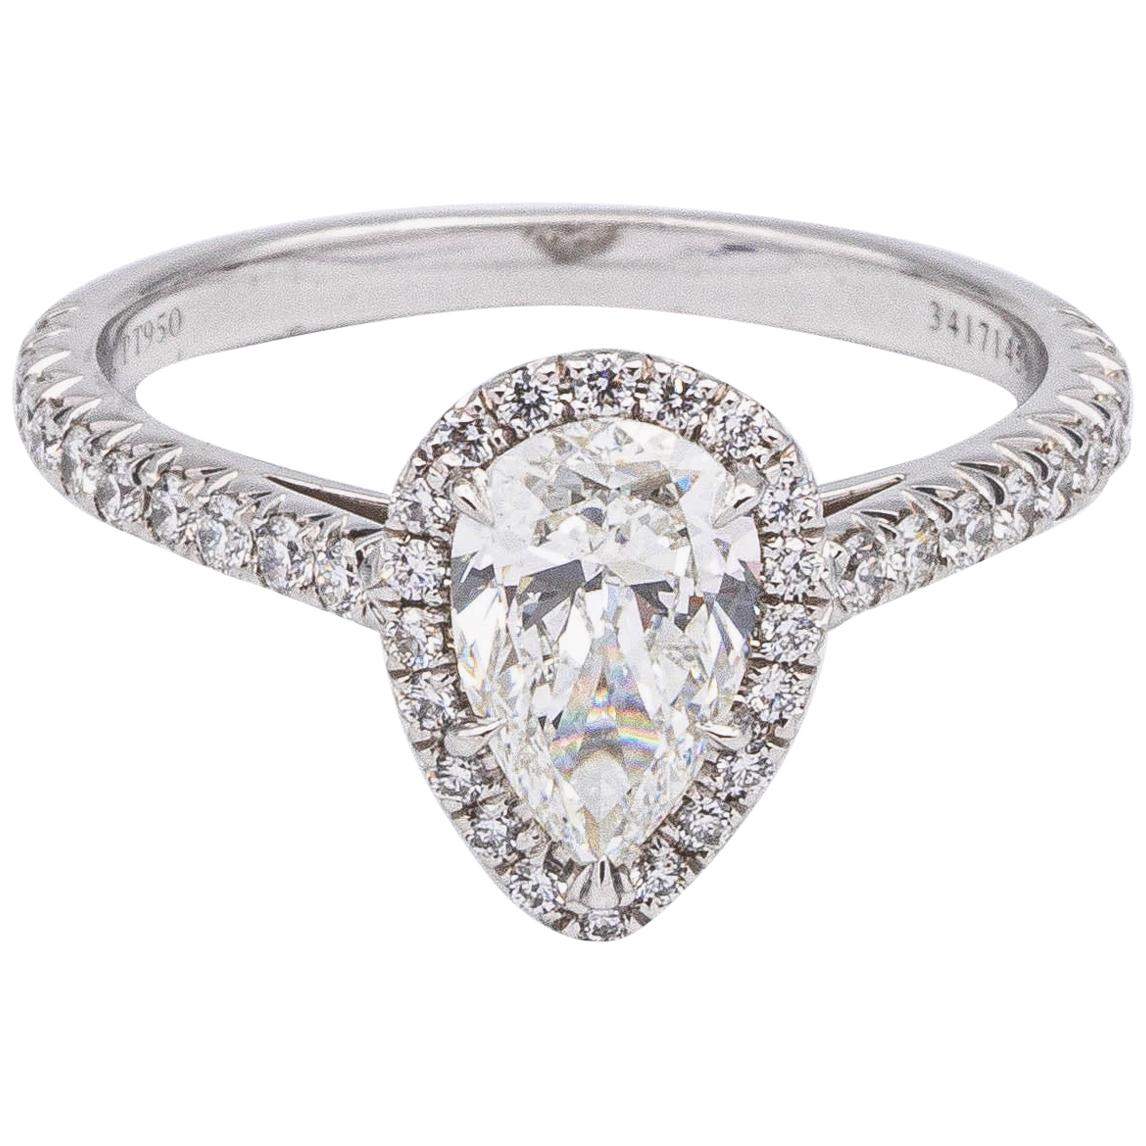 Tiffany & Co. Soleste 1.09 Carat TW G-VS1 Pear Shape Engagement Ring in Platinum